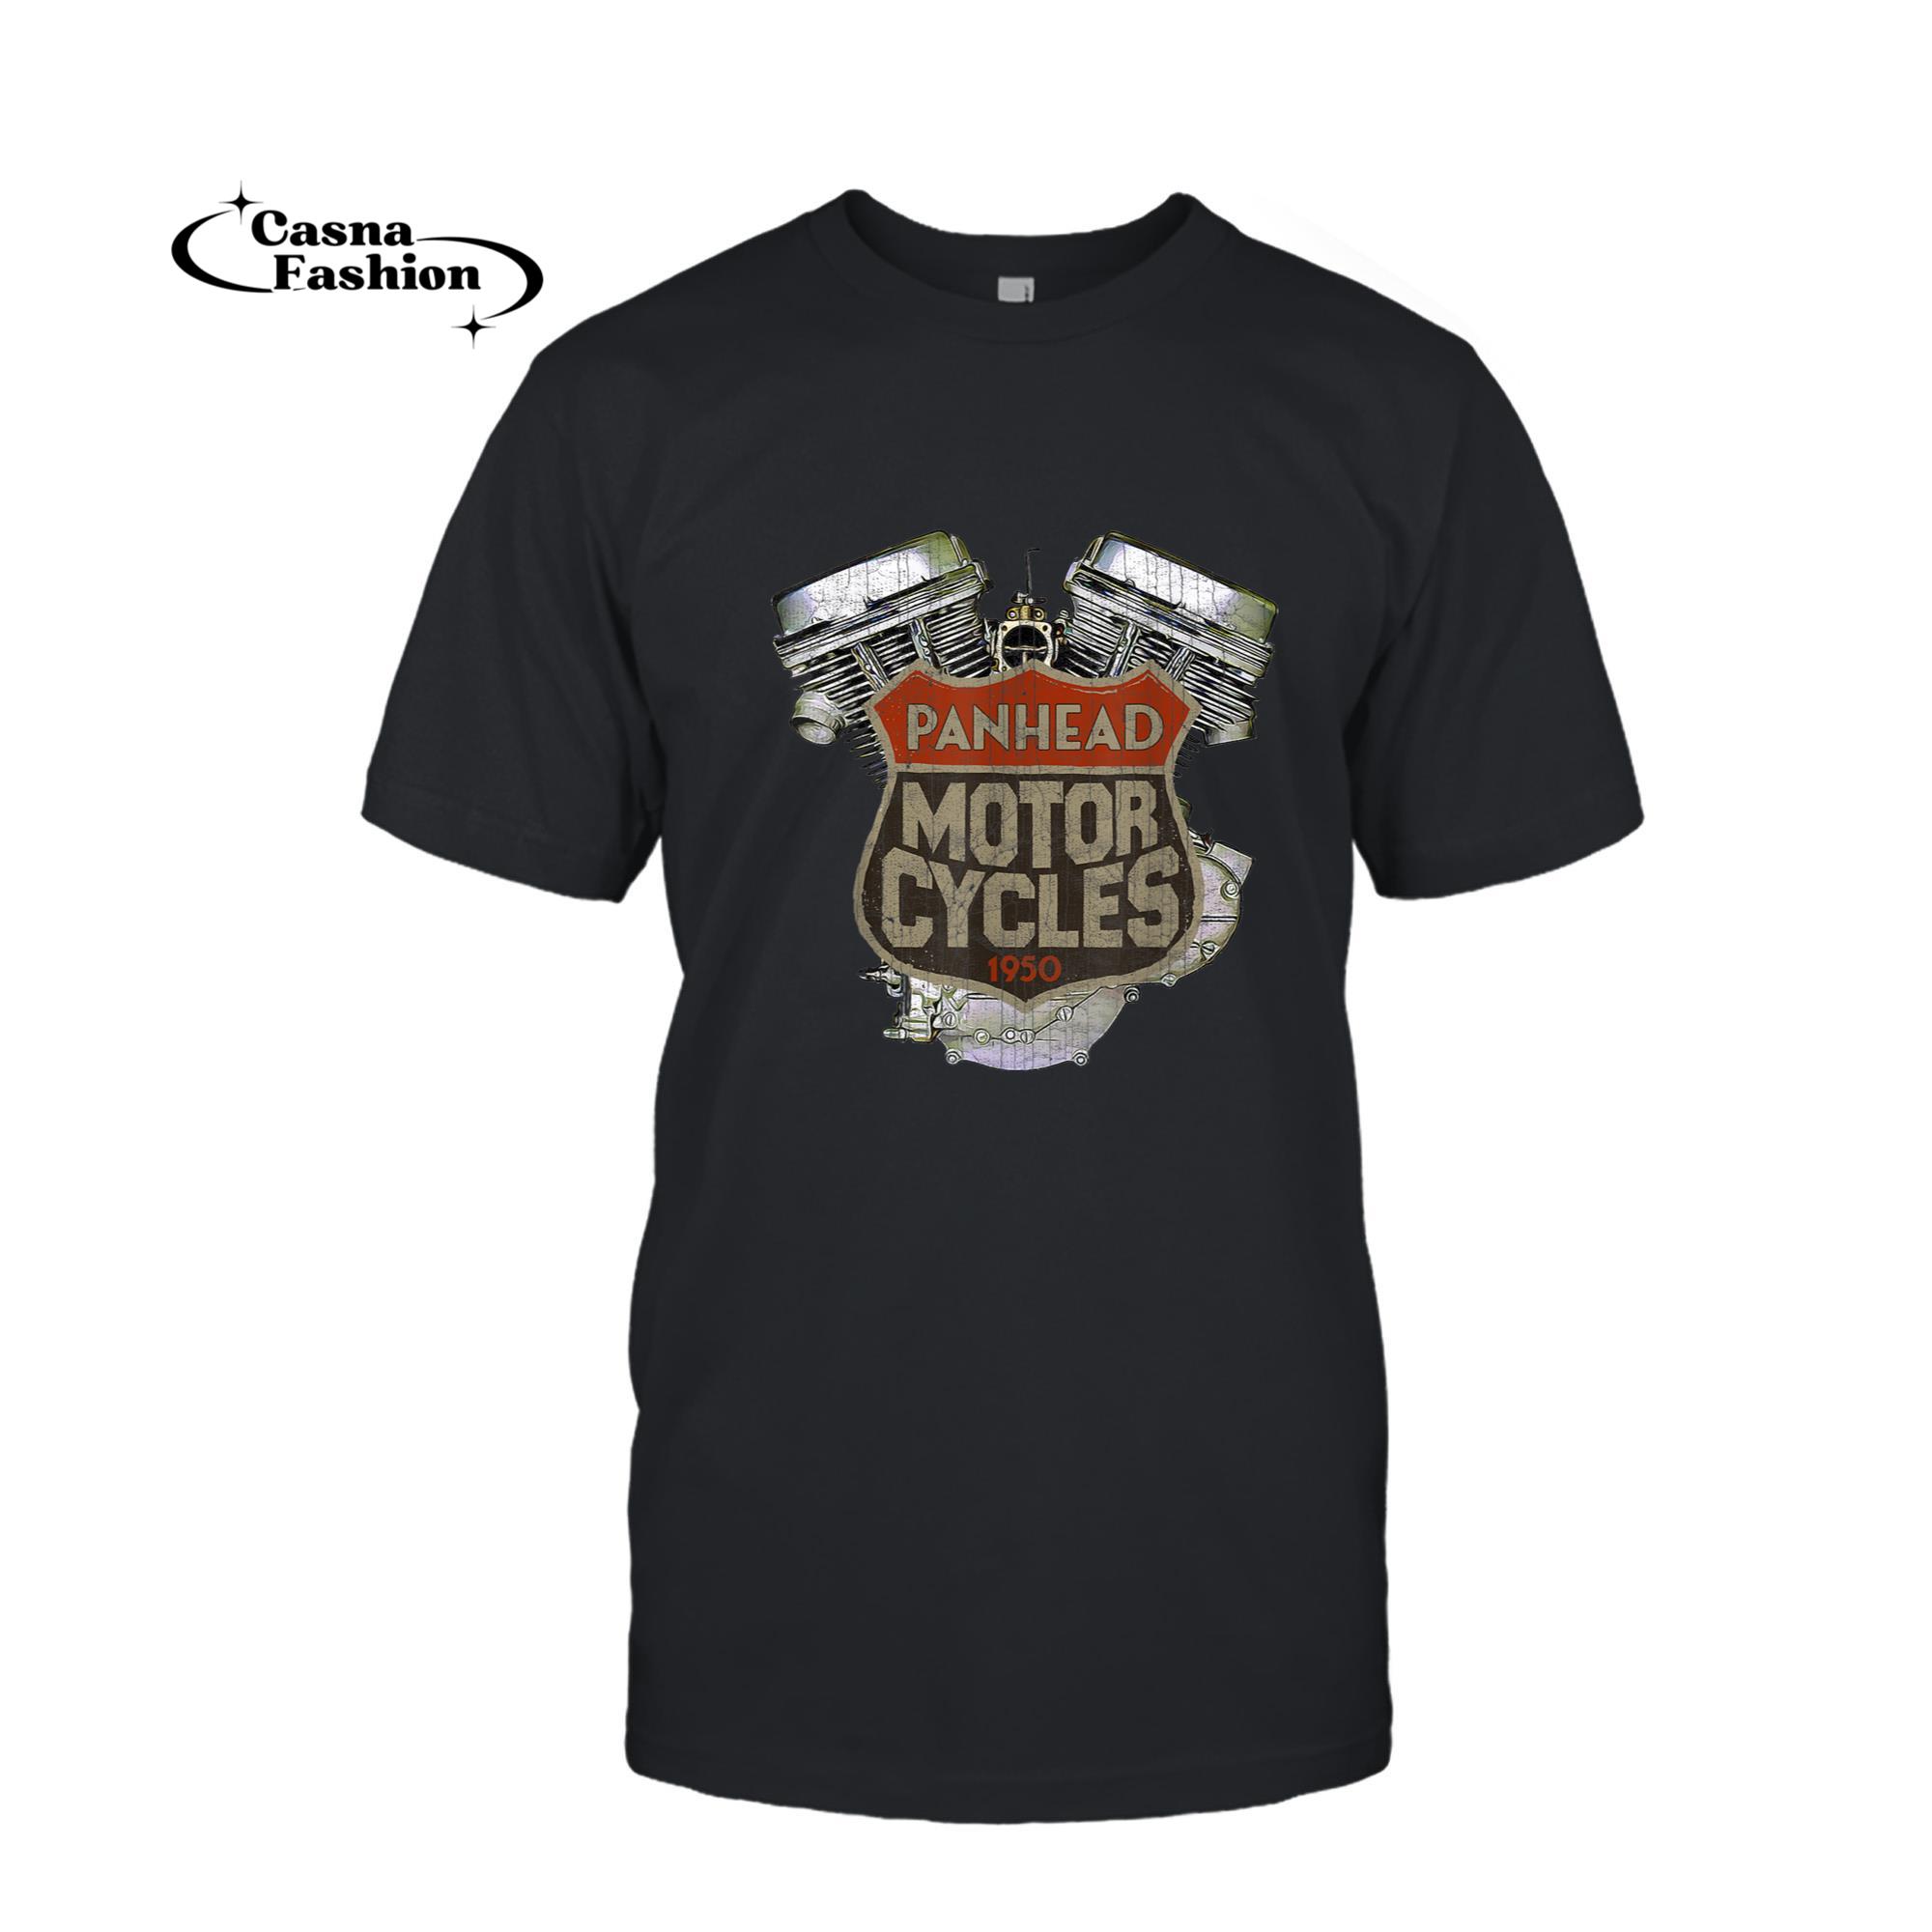 casnafashion_T-shirt_1950 Panhead Motorcycle Vintage Distressed Biker Chopper Rat T-Shirt_T-shirt_Black